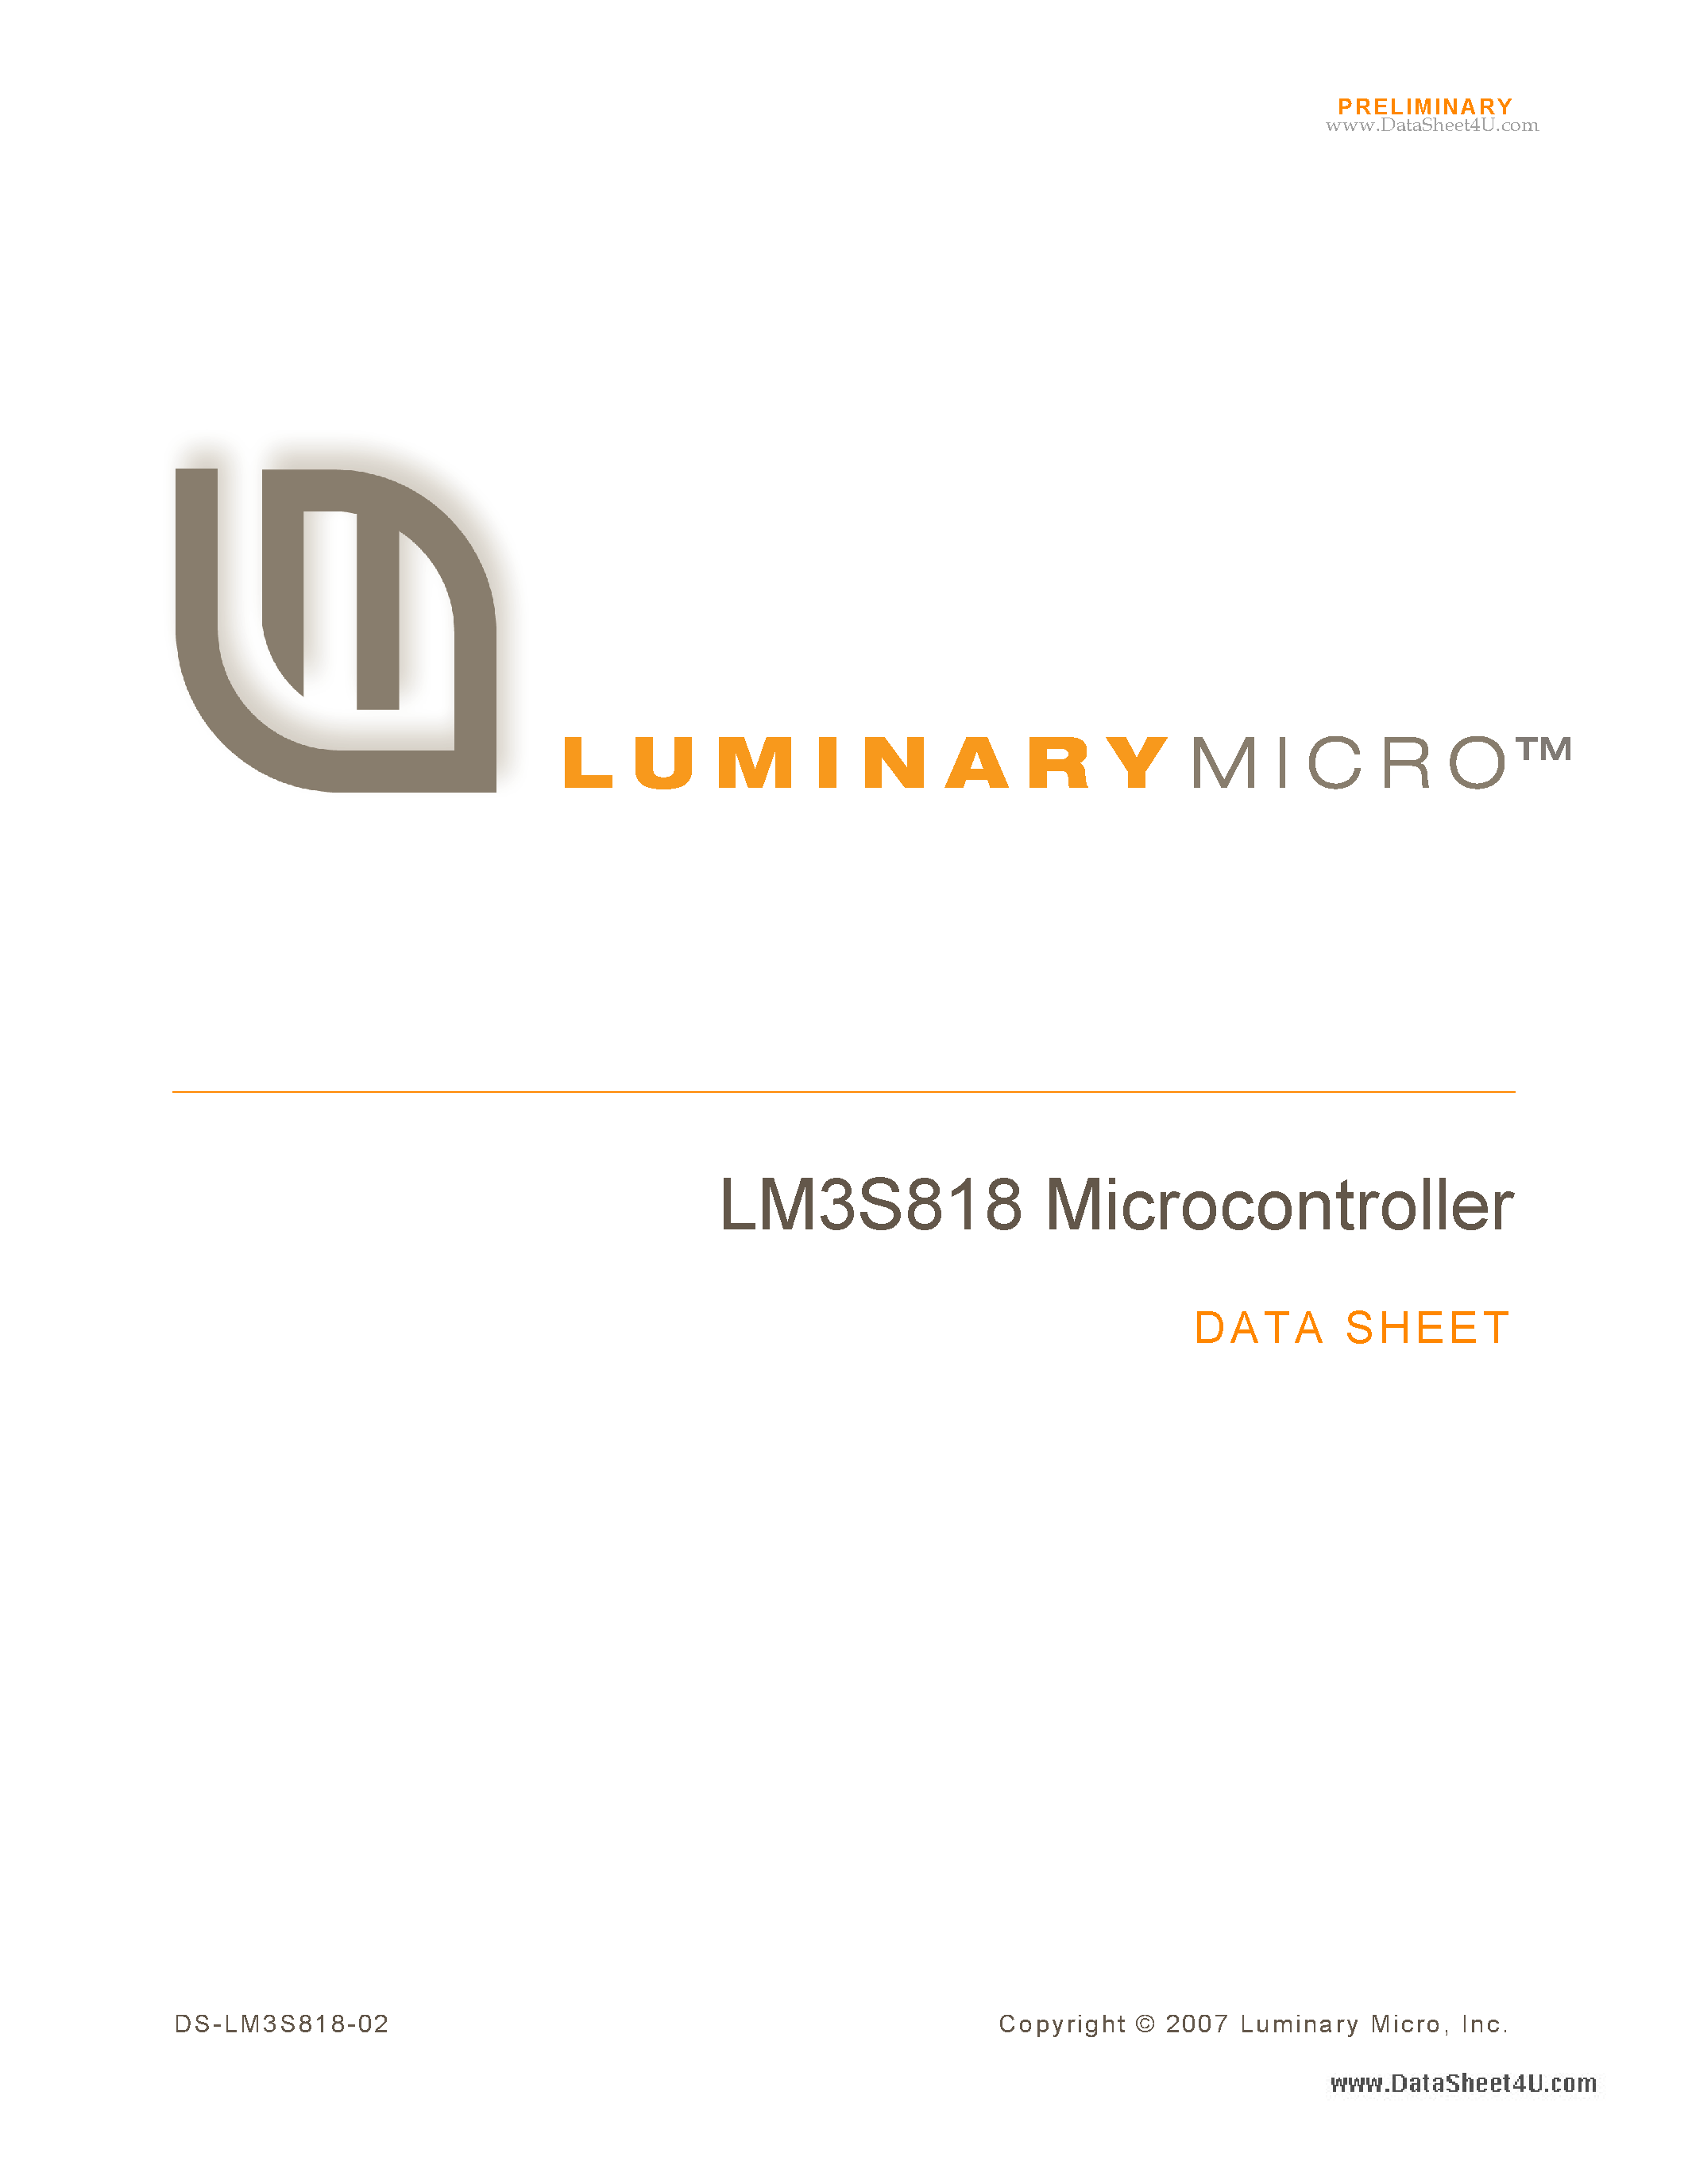 Даташит LM3S818 - Microcontroller страница 1